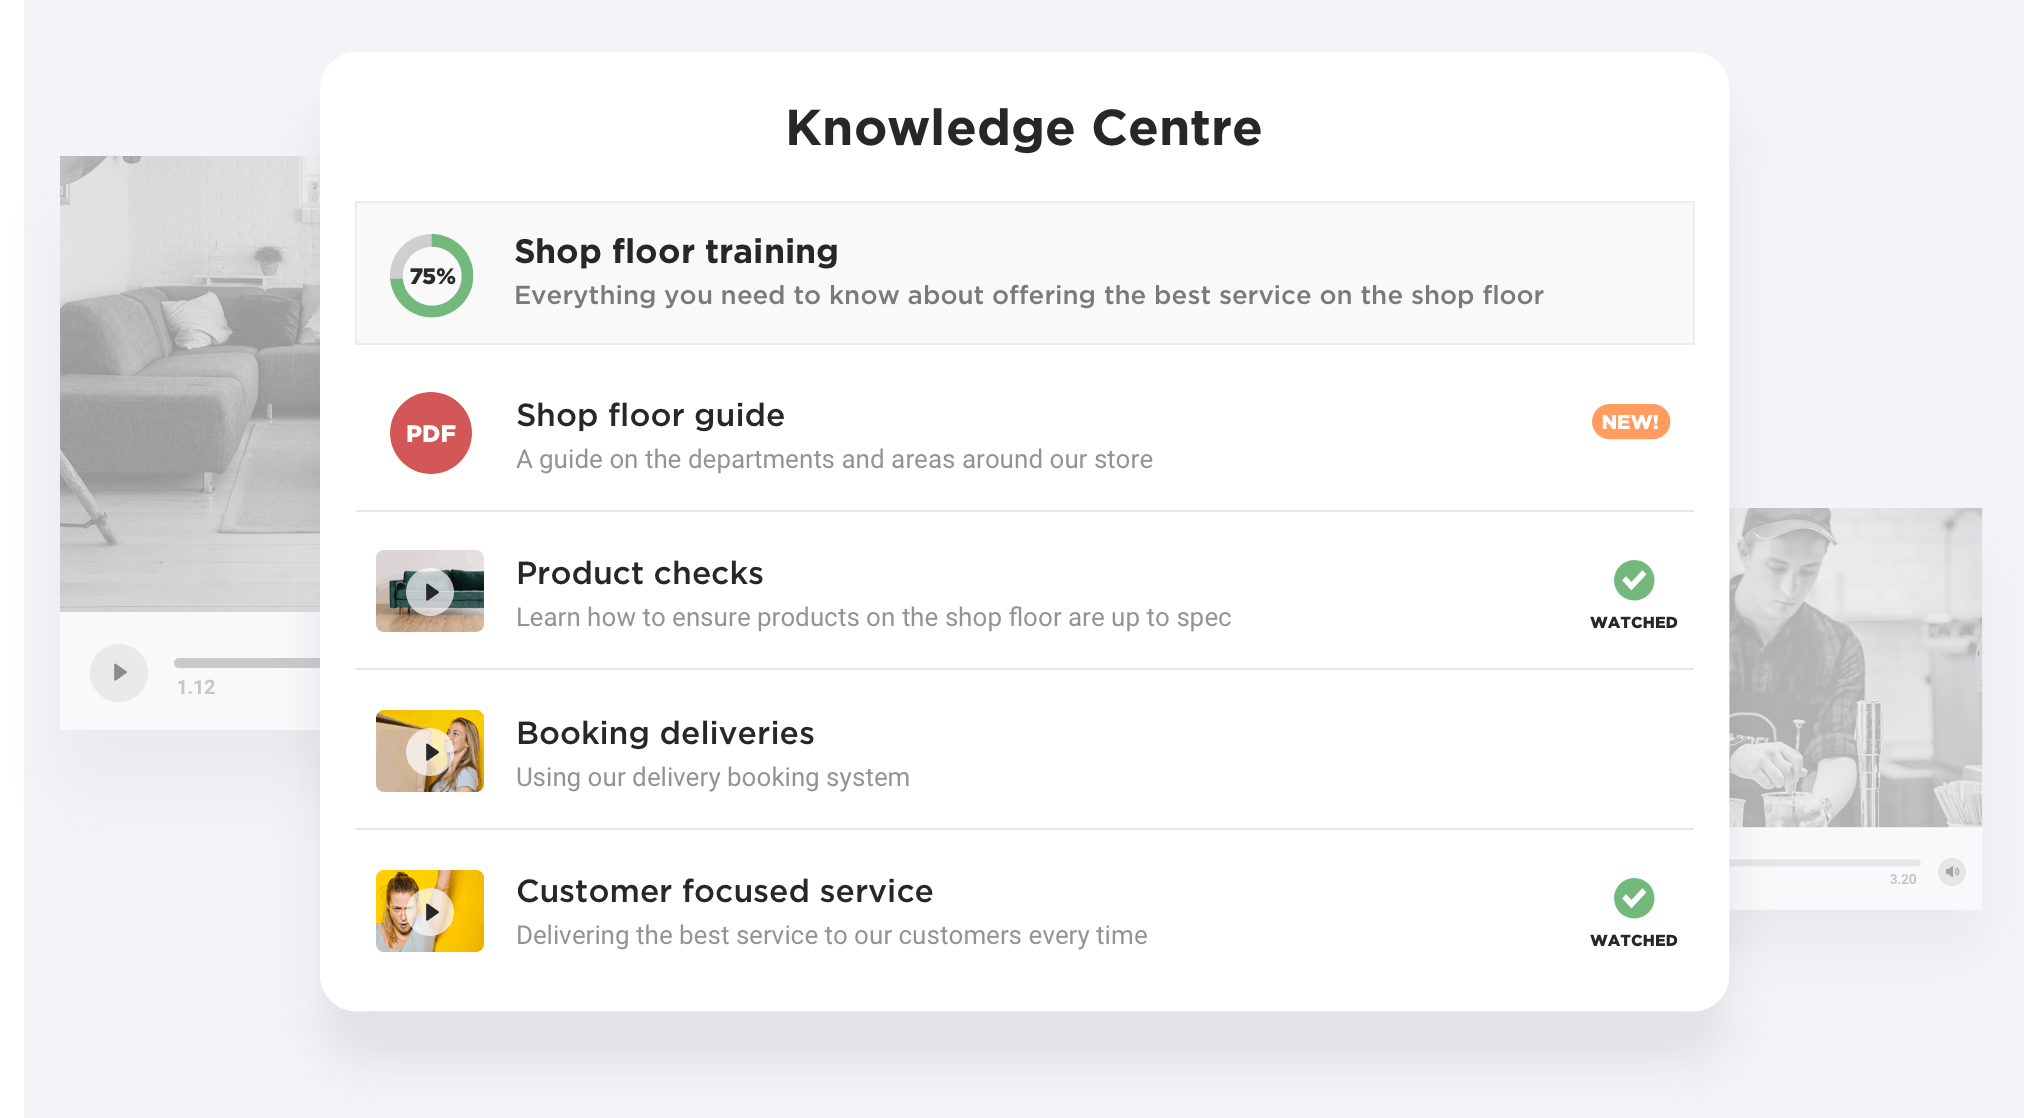 RetailOS employee knowledge centre